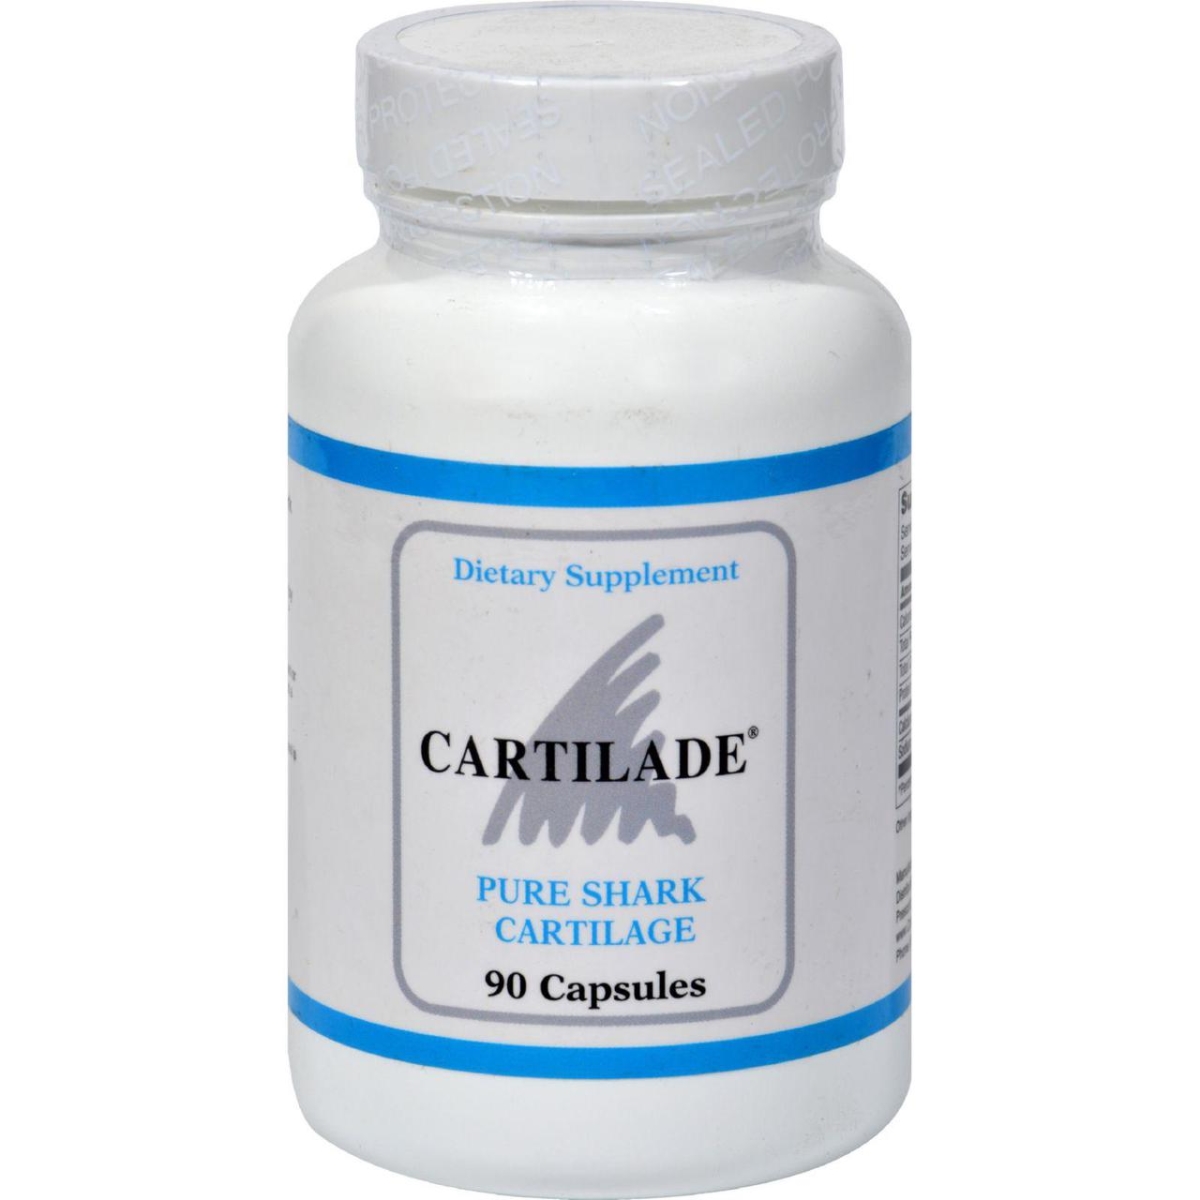 Hg0366583 Pure Shark Cartilage - 90 Capsules